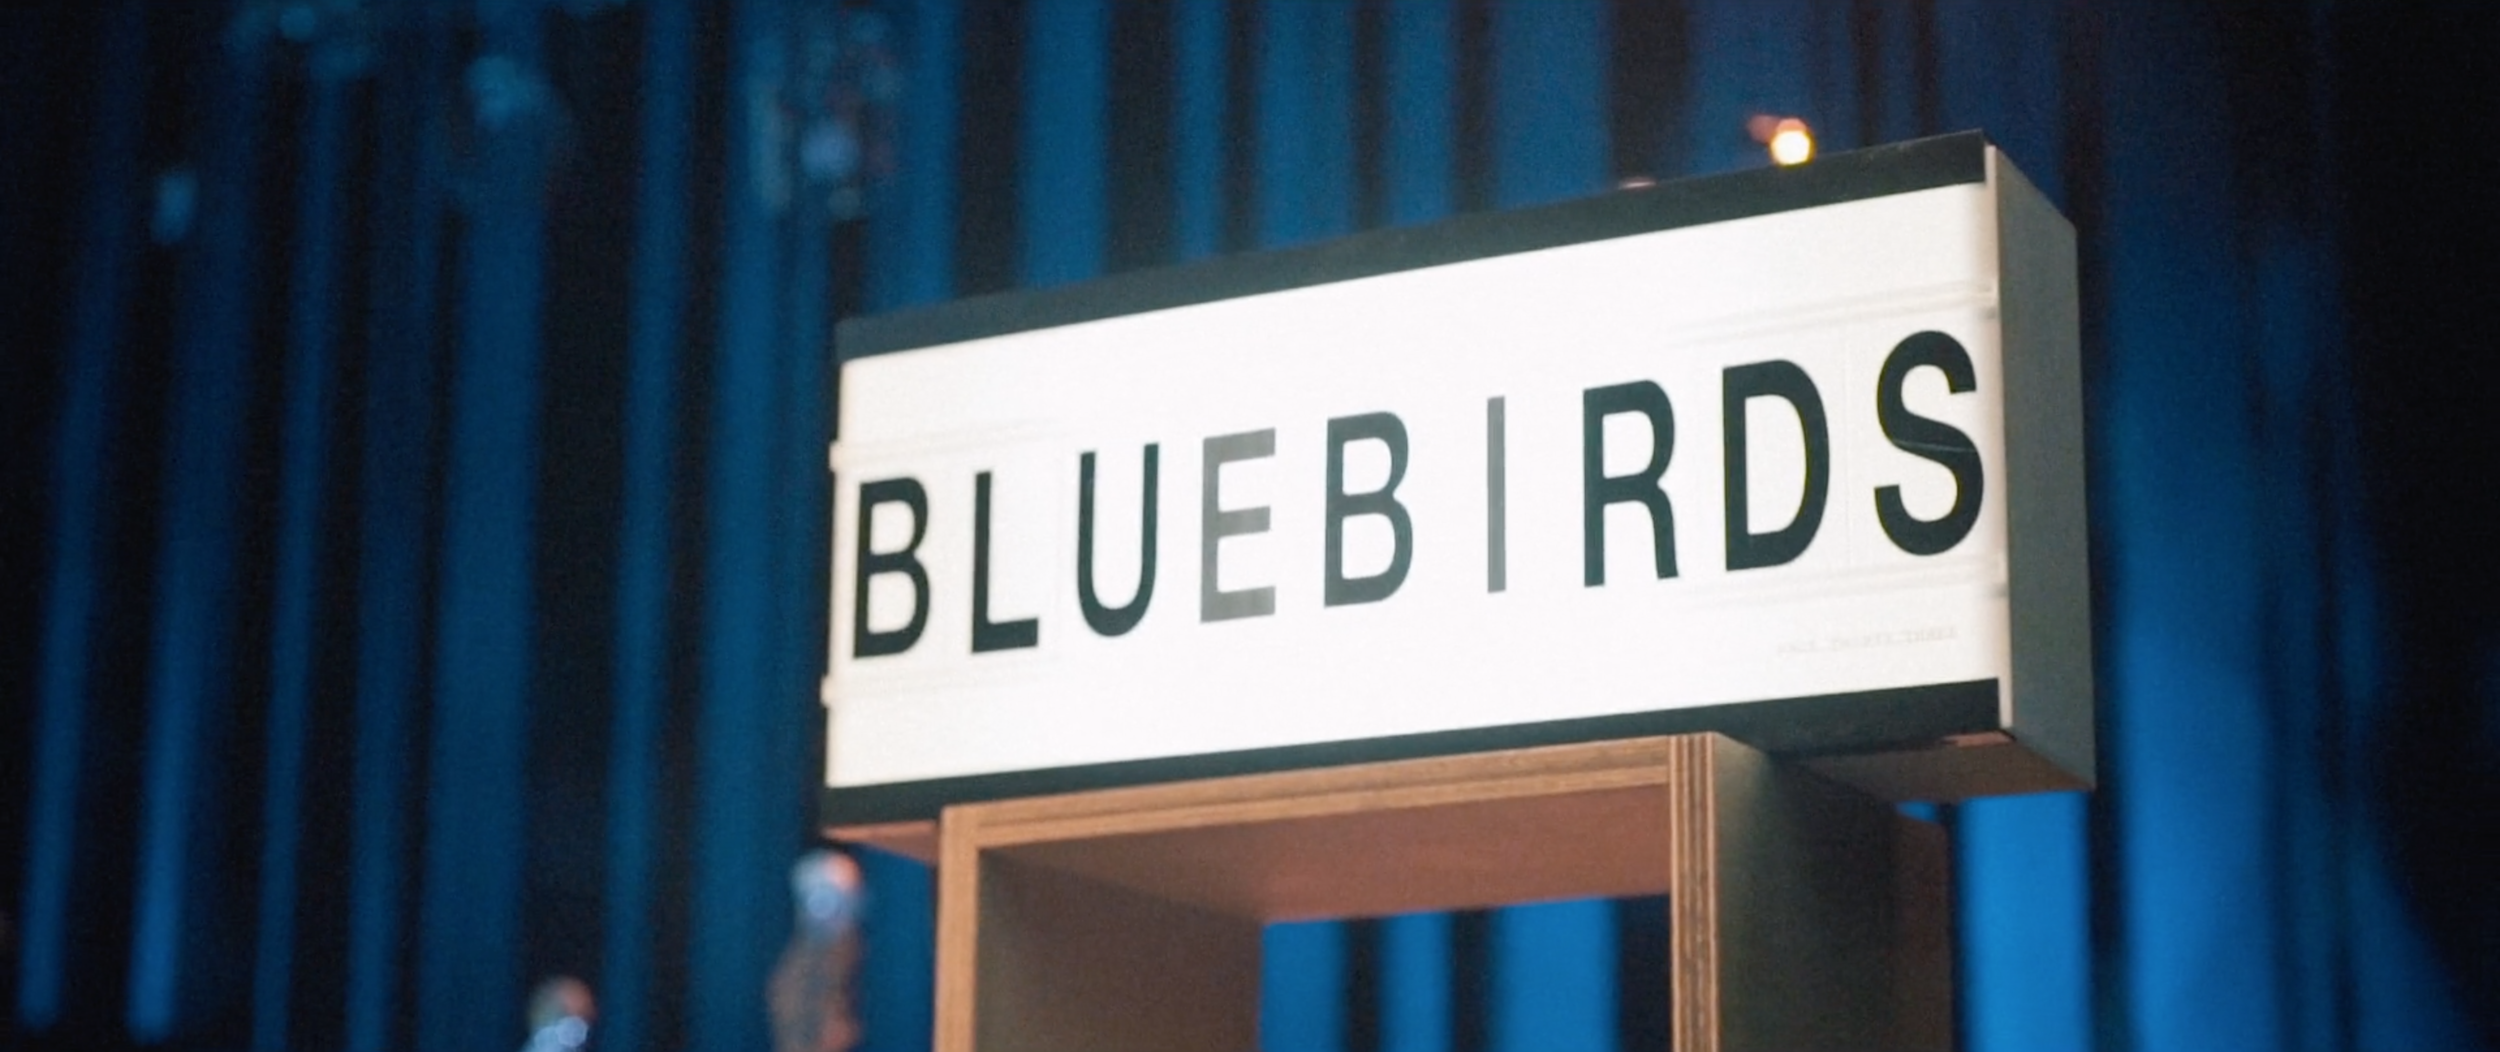 BLUEBIRDS FLY Concert - Highlights